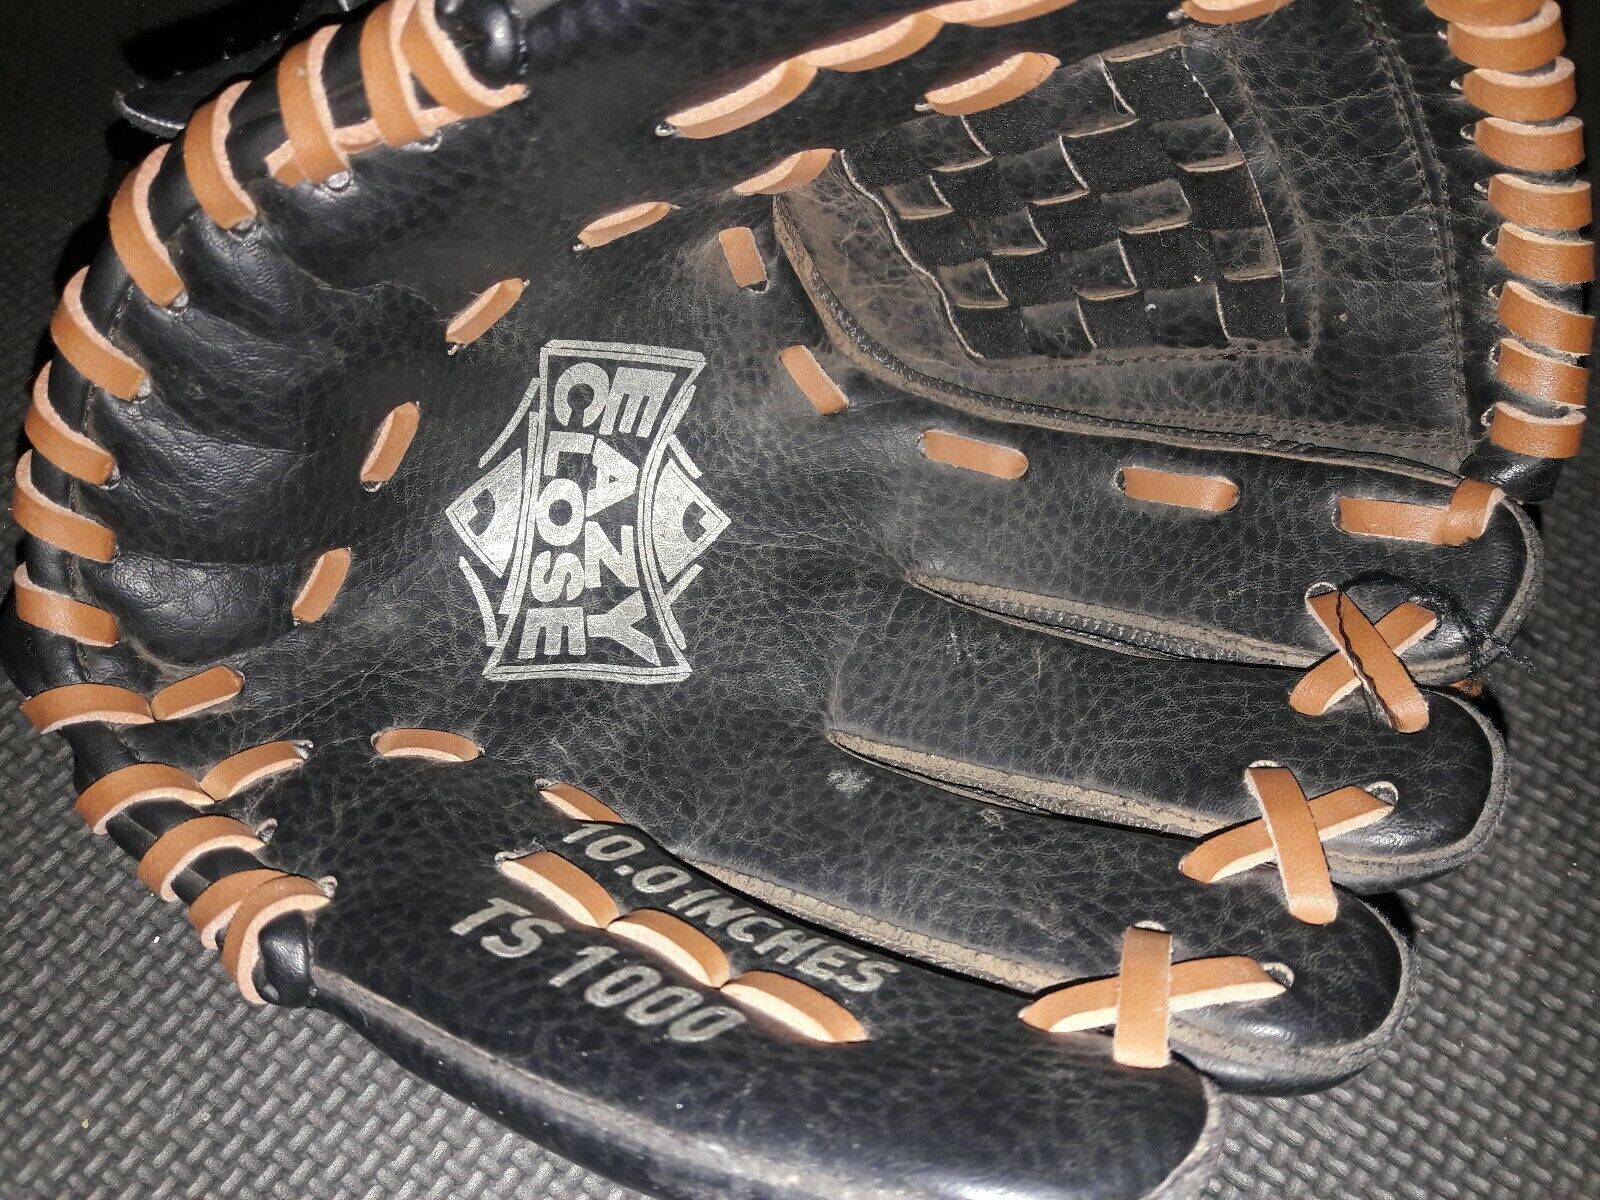 adidas easy close baseball glove